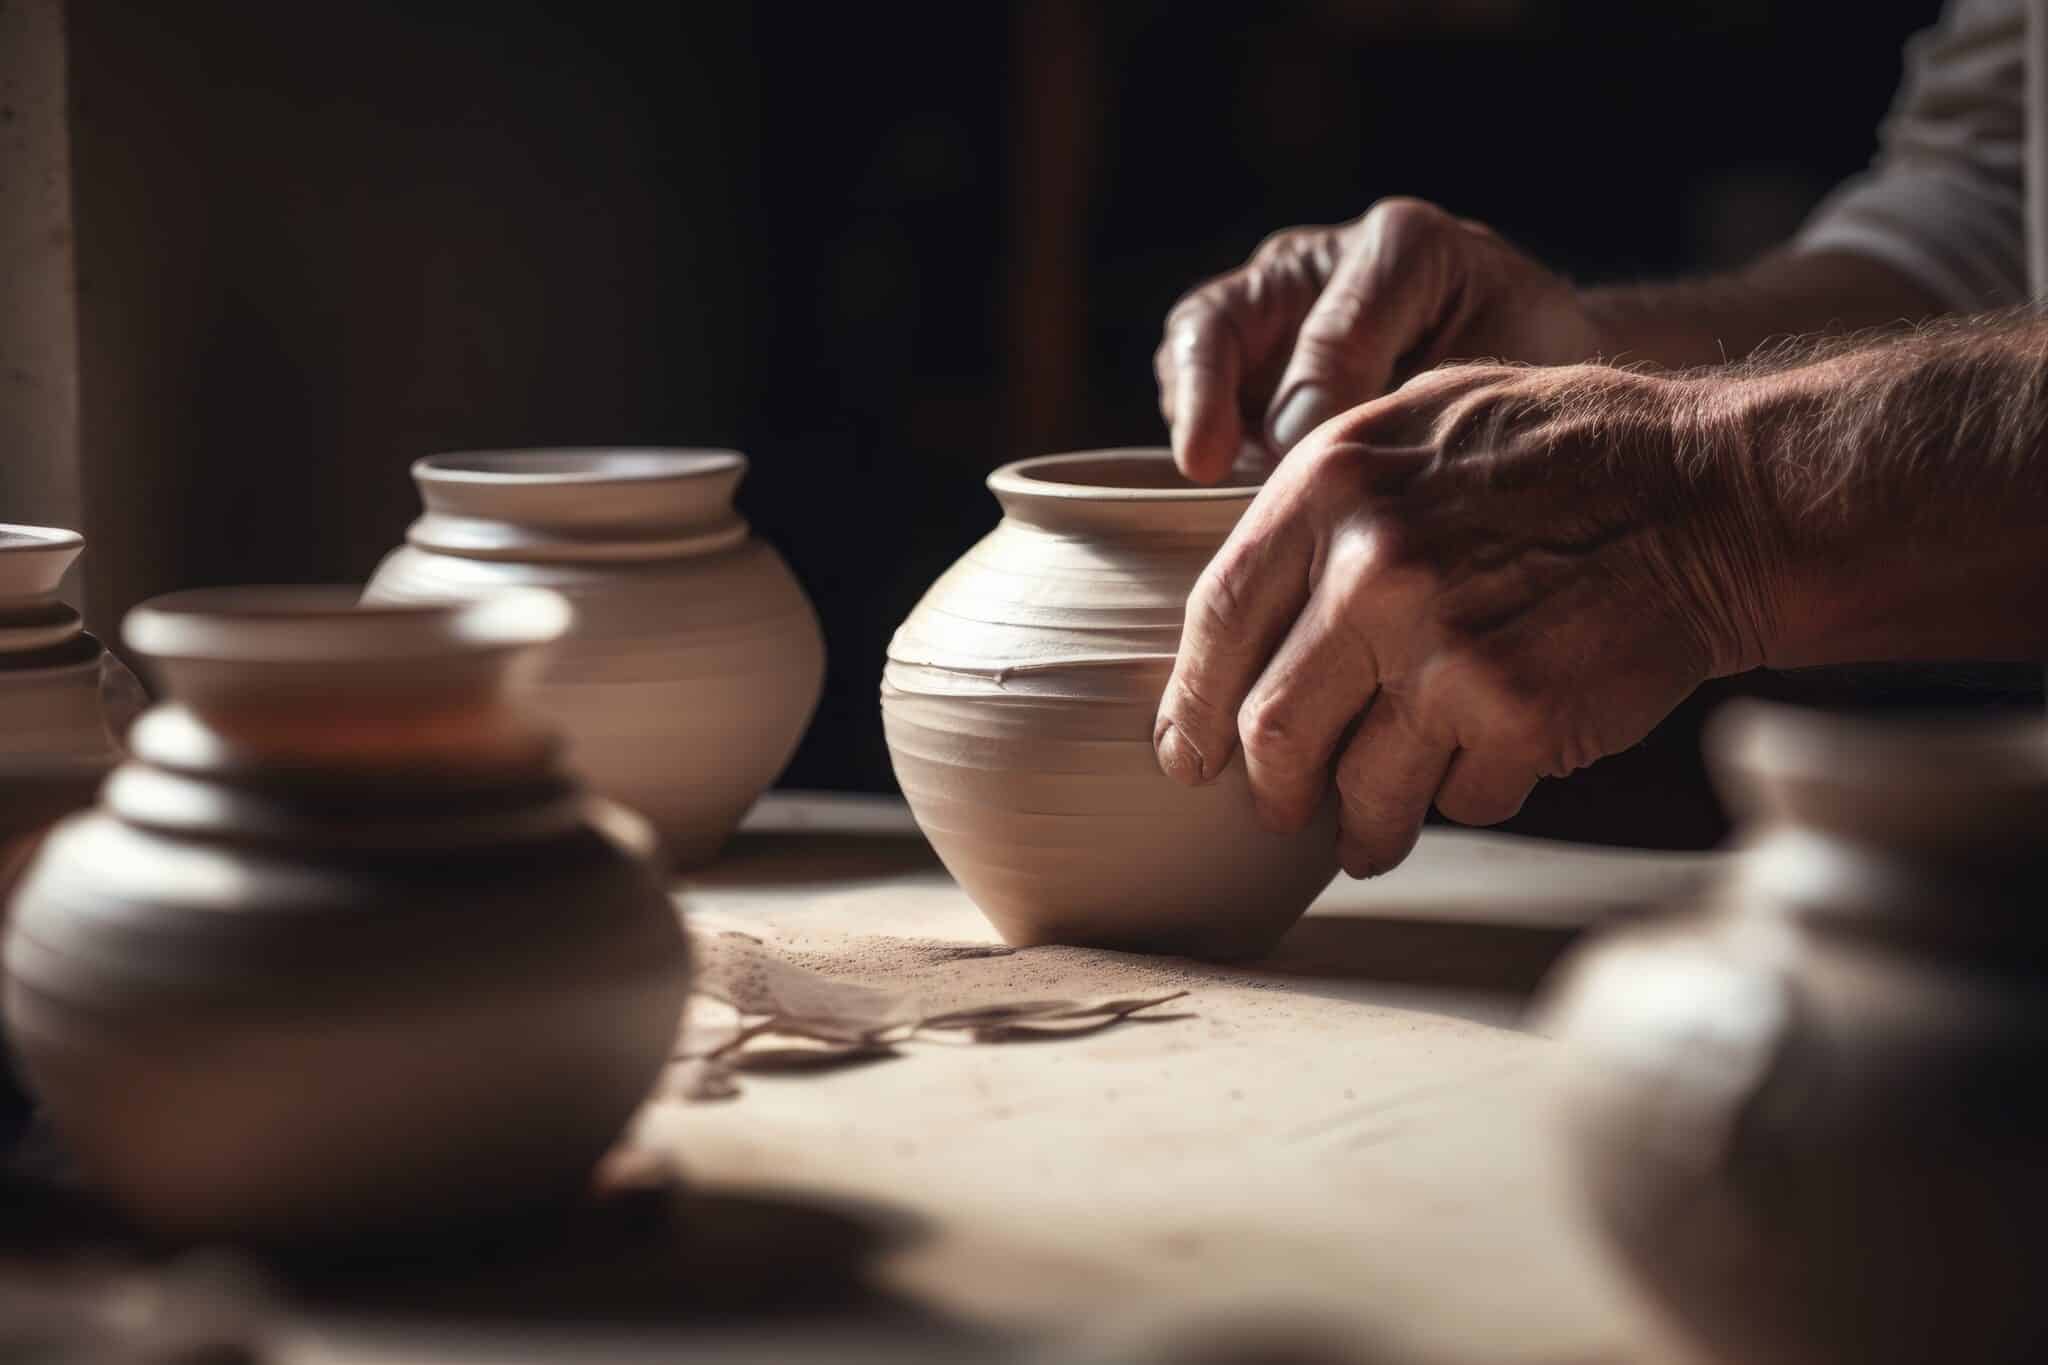 artist building clay pots